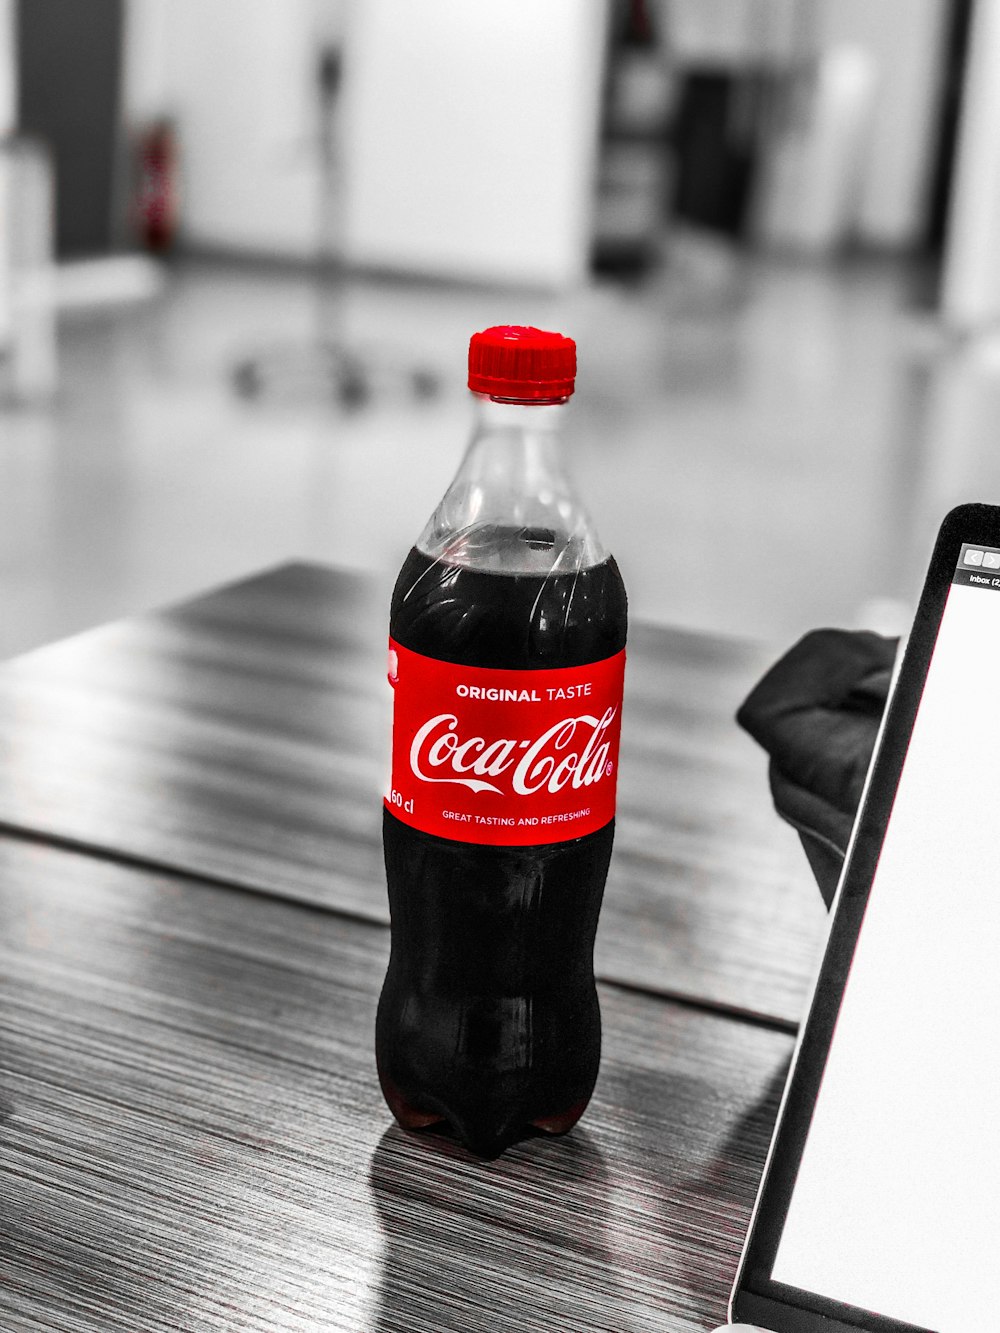 Coca-Cola bottle on table photo – Free Person Image on Unsplash